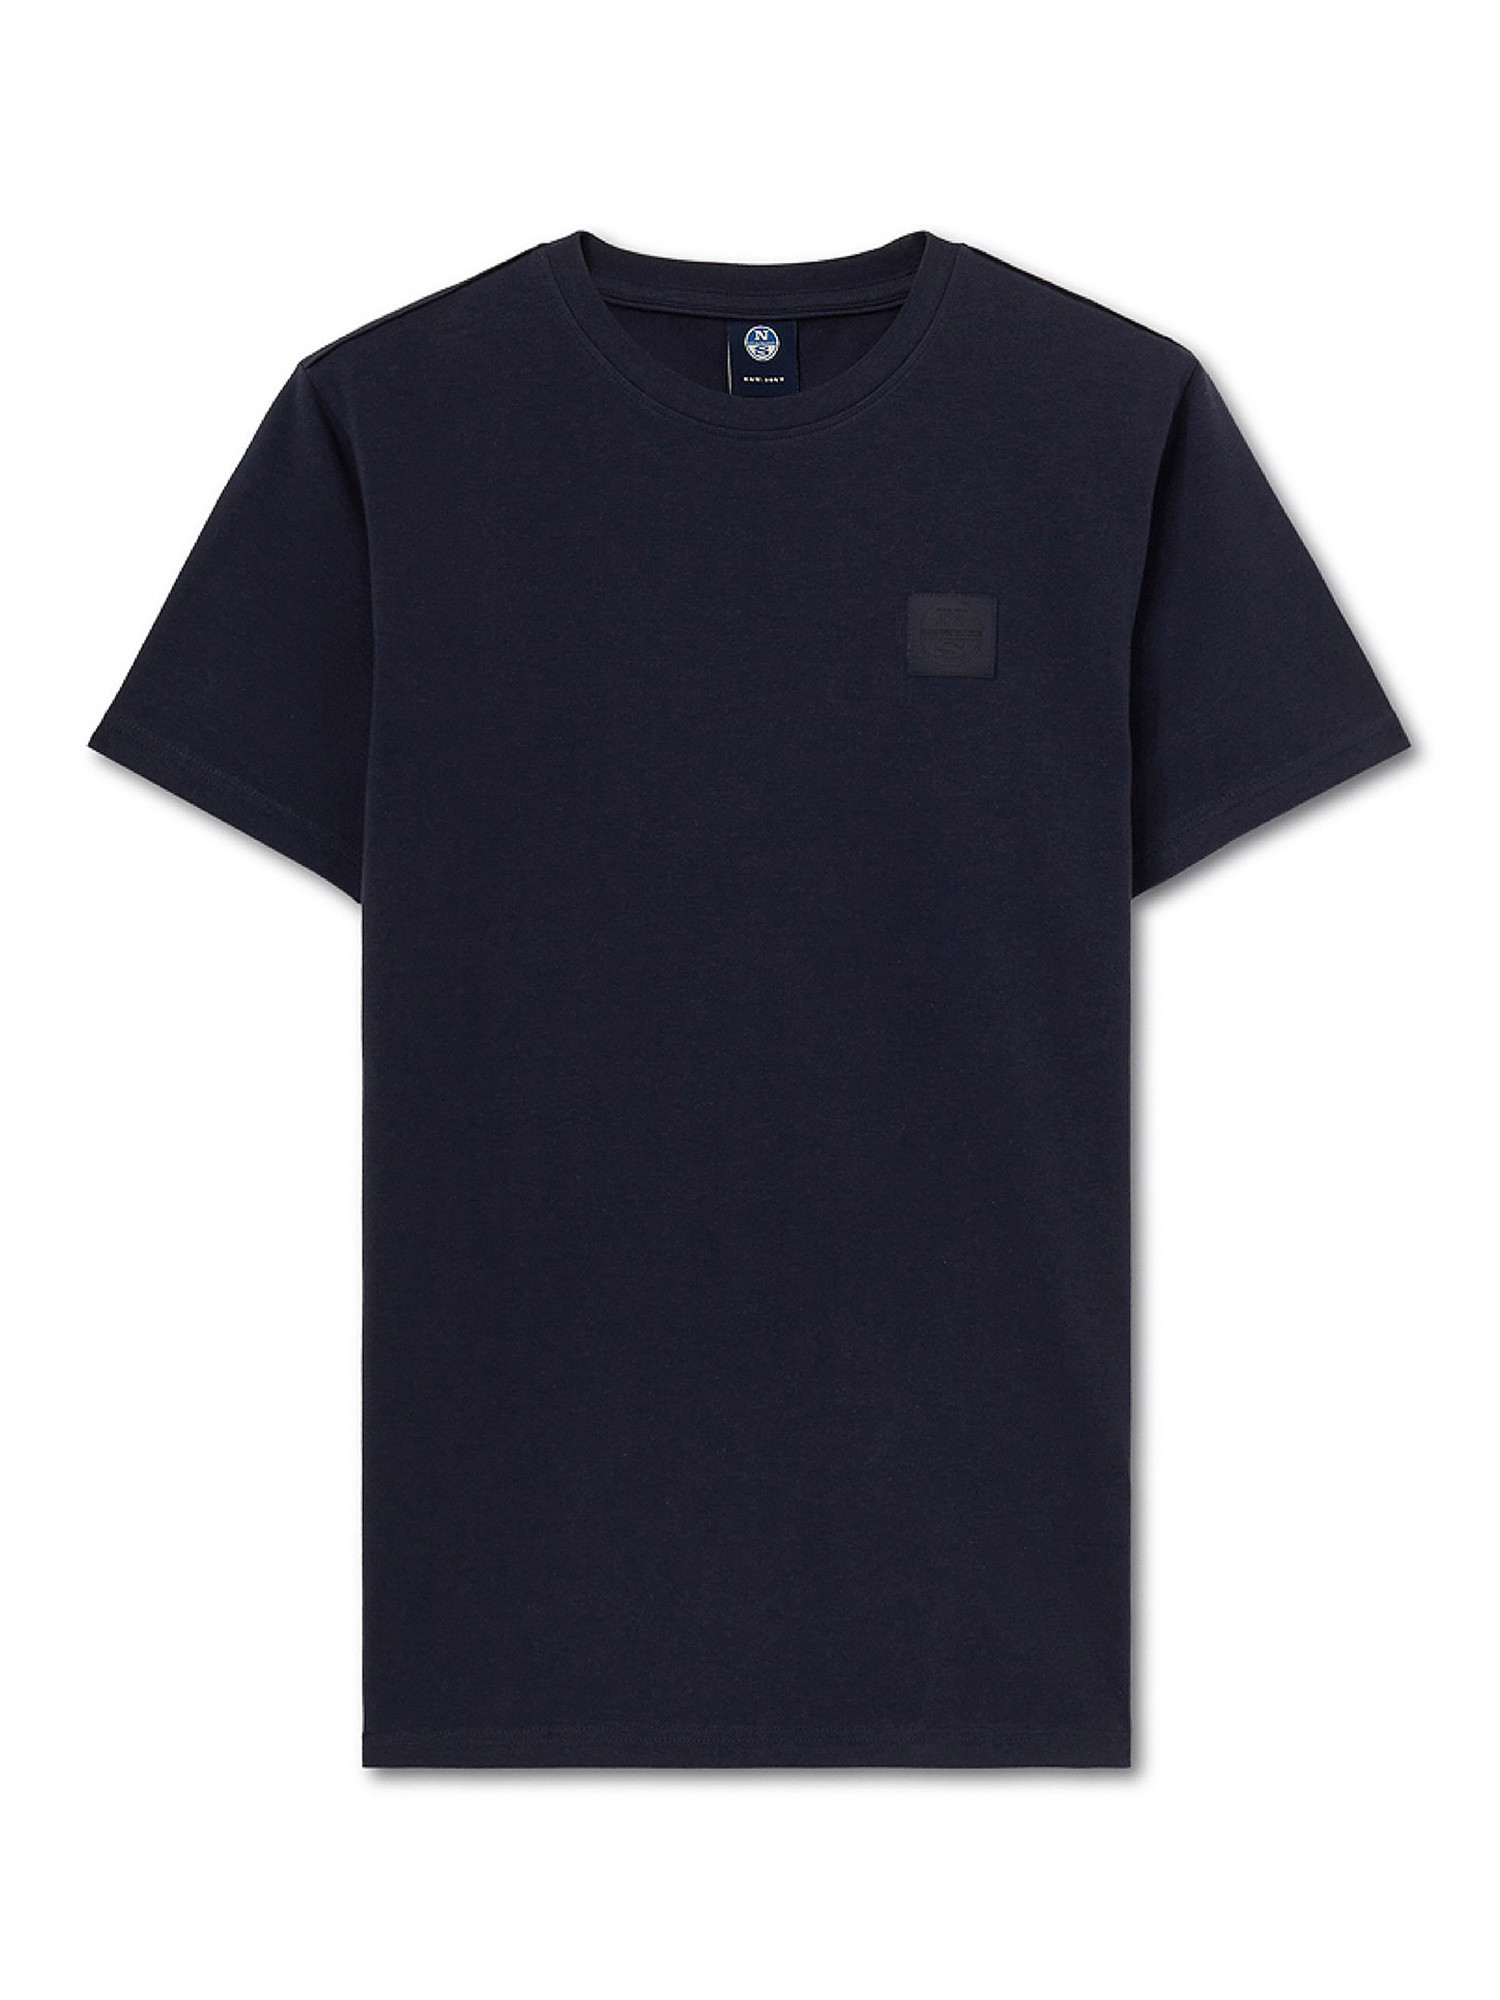 T-shirt manica corta con logo, Blu, large image number 0